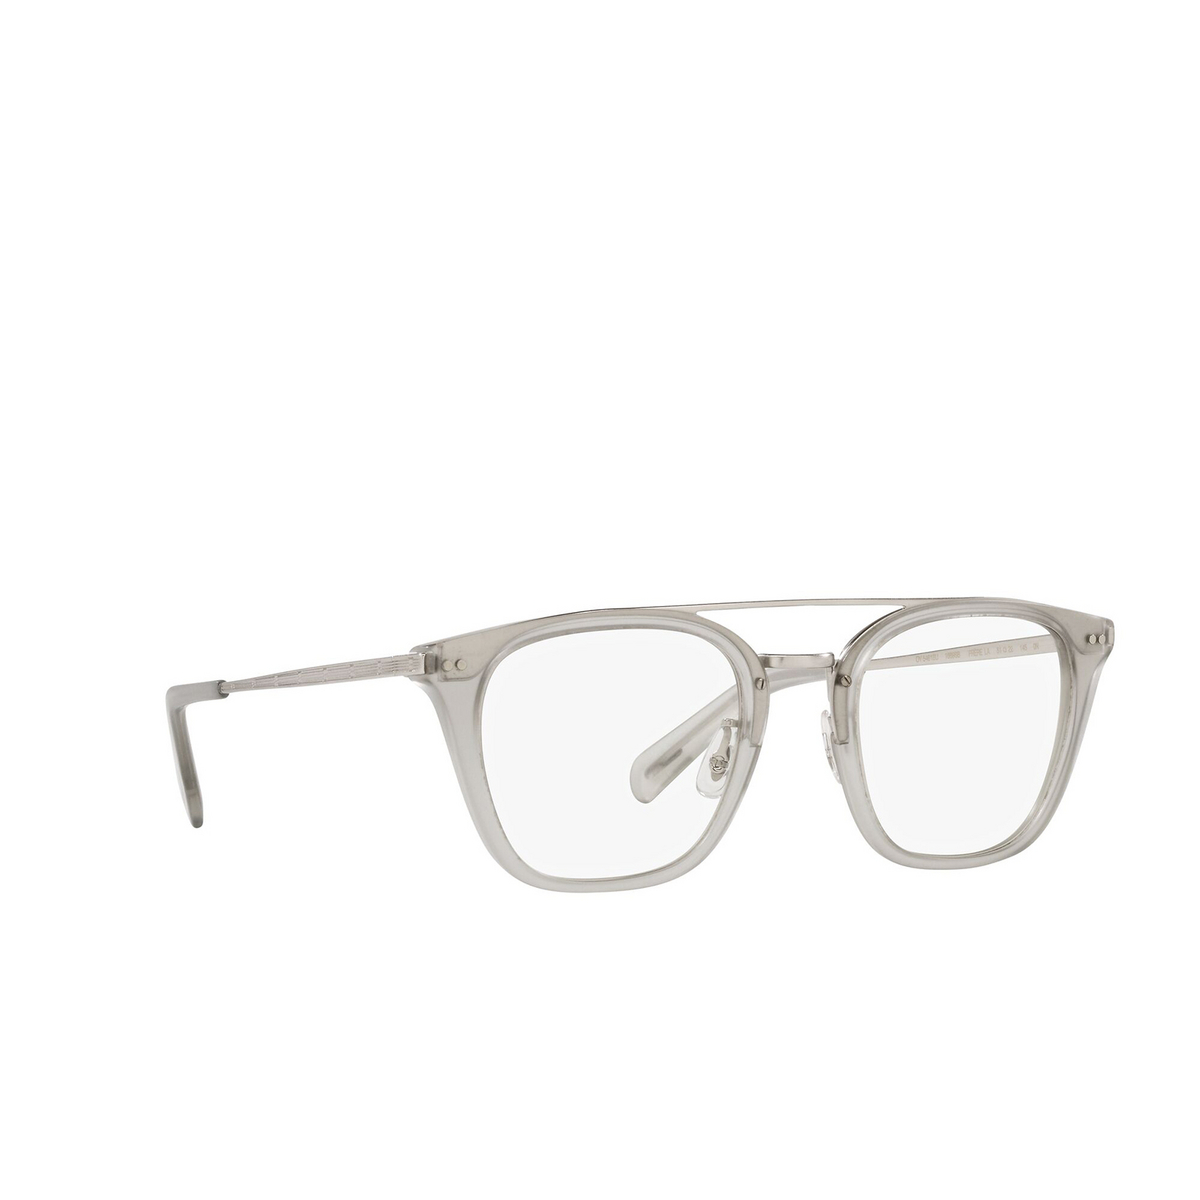 Oliver Peoples® Rectangle Sunglasses: Frère La OV5461SU color Brushed Chrome 1669SB - three-quarters view.